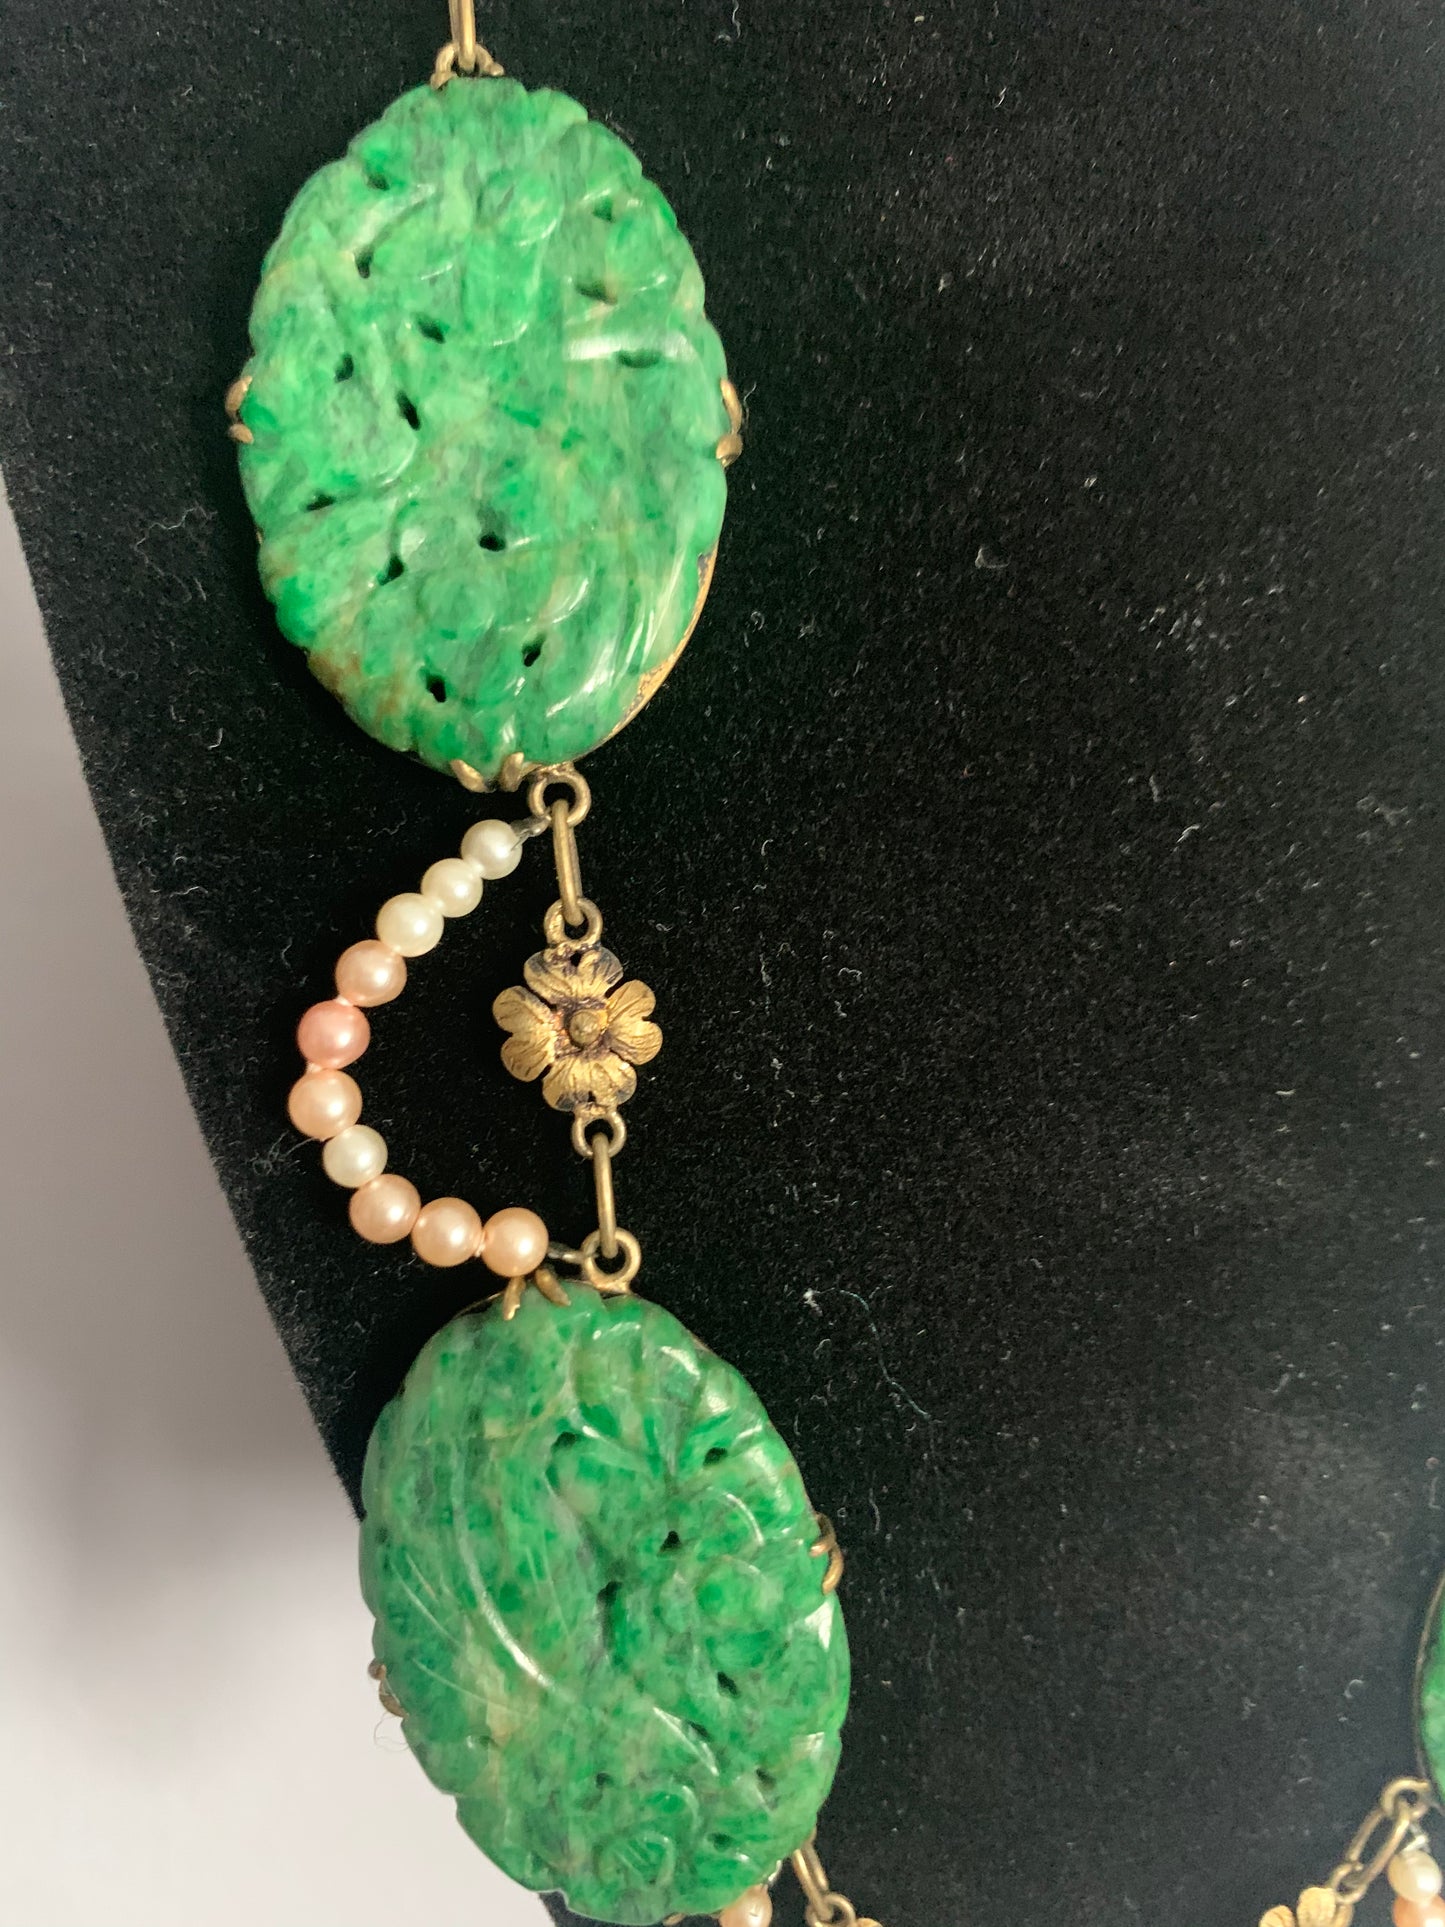 A vintage jadeite necklace in 10kt setting